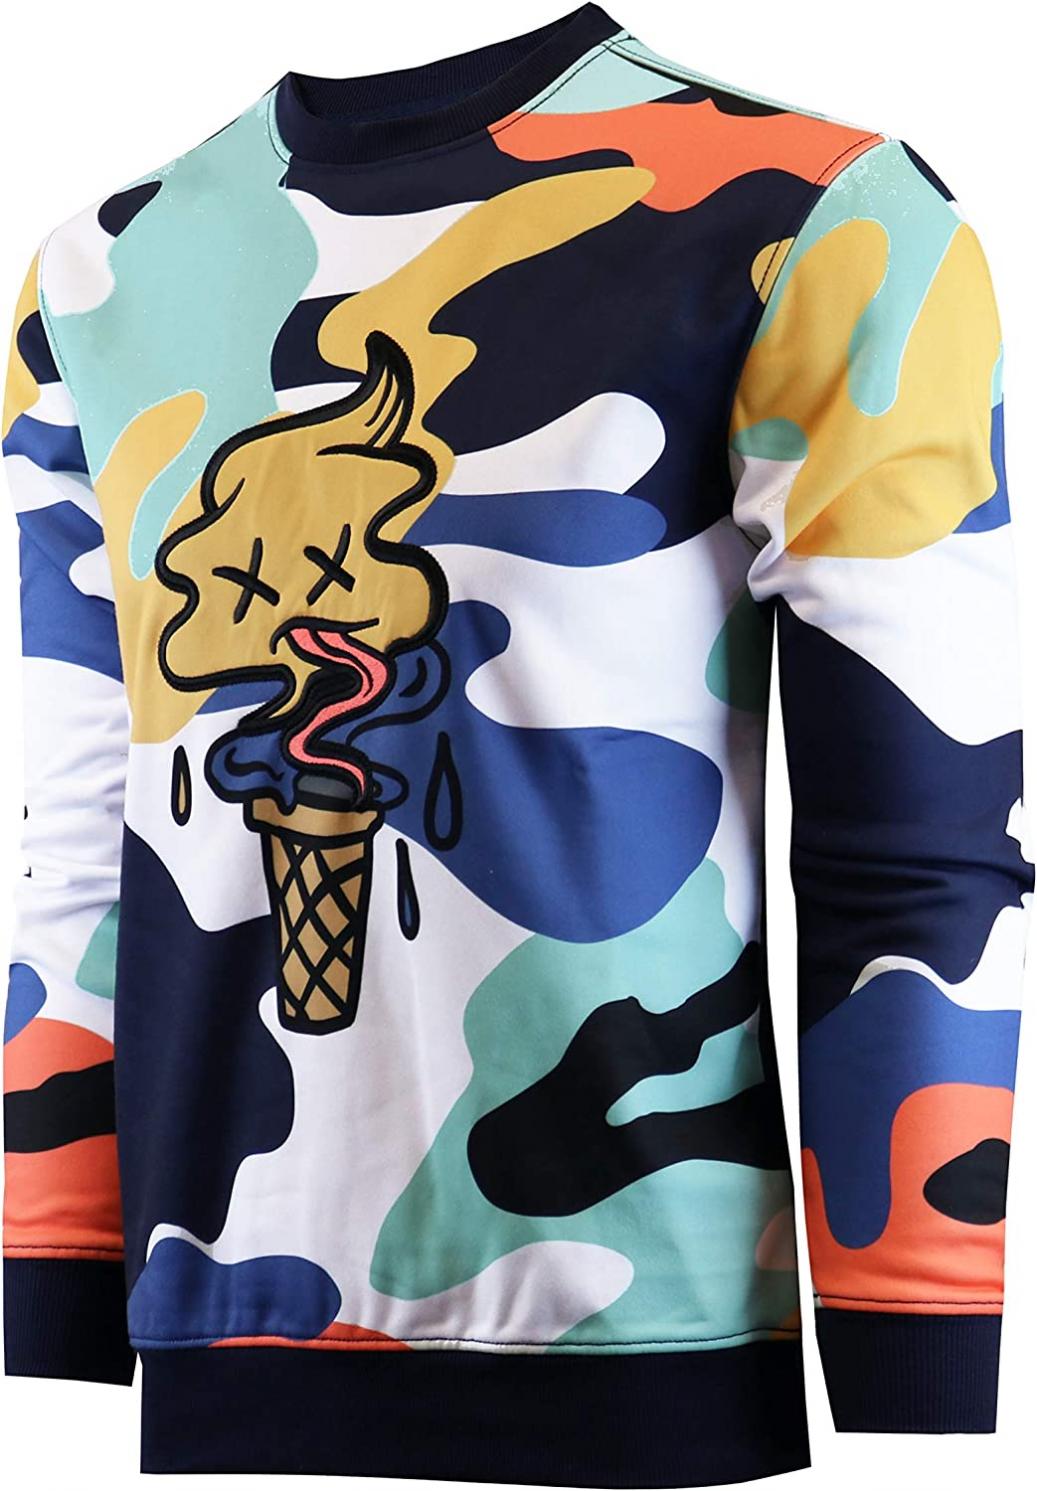 Screenshotbrand Mens Urban Hip Hop Premium Fleece - Pullover Active Urbanwear Street Fashion Crew Neck Sweatshirt